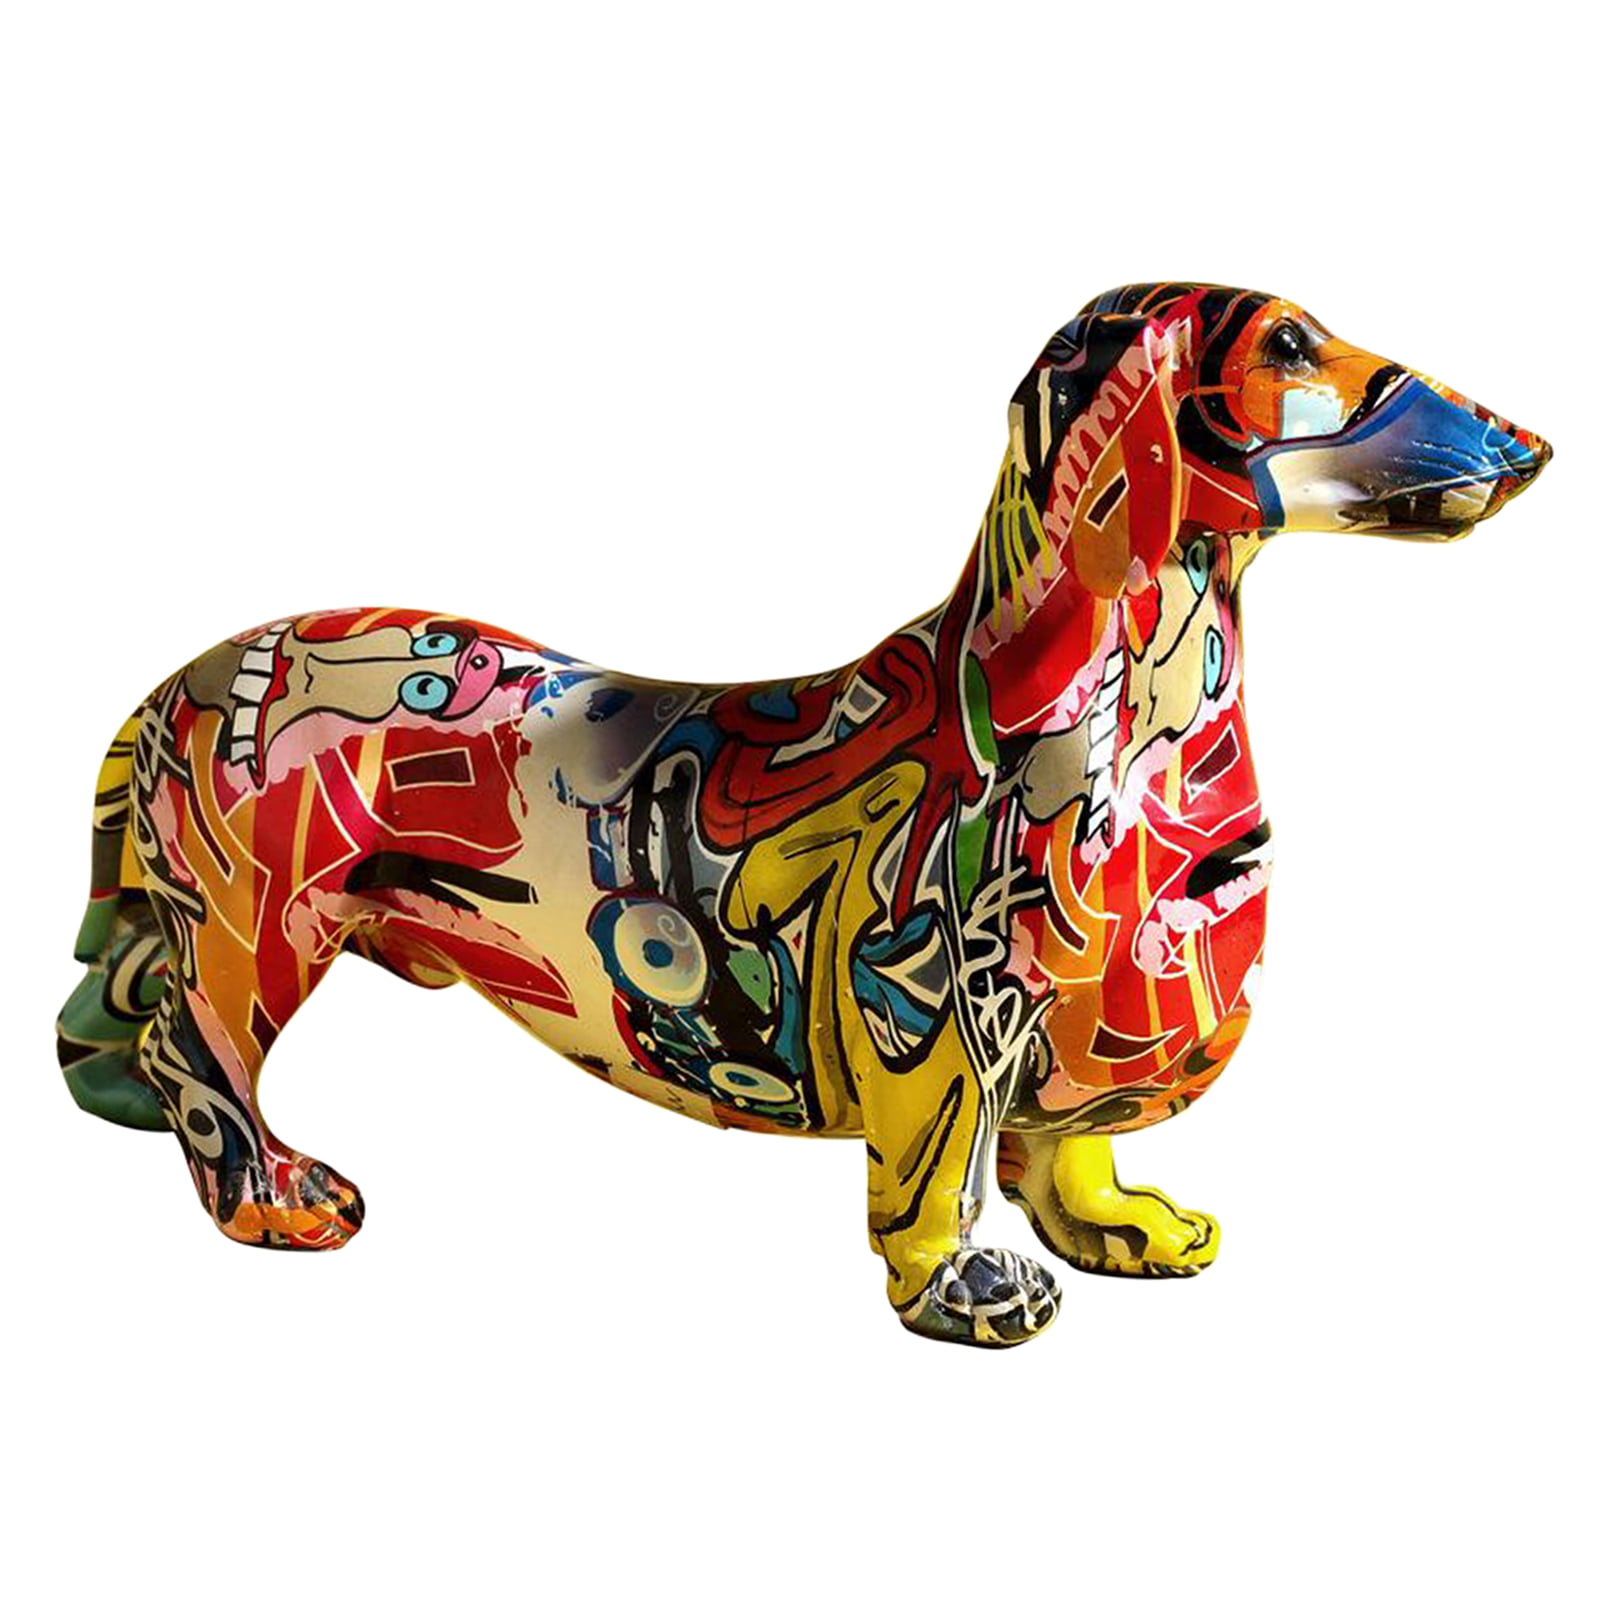 Graffiti Dachshund Sausage Dog Figurine Sculpture Statue Resin Craft Decoration 